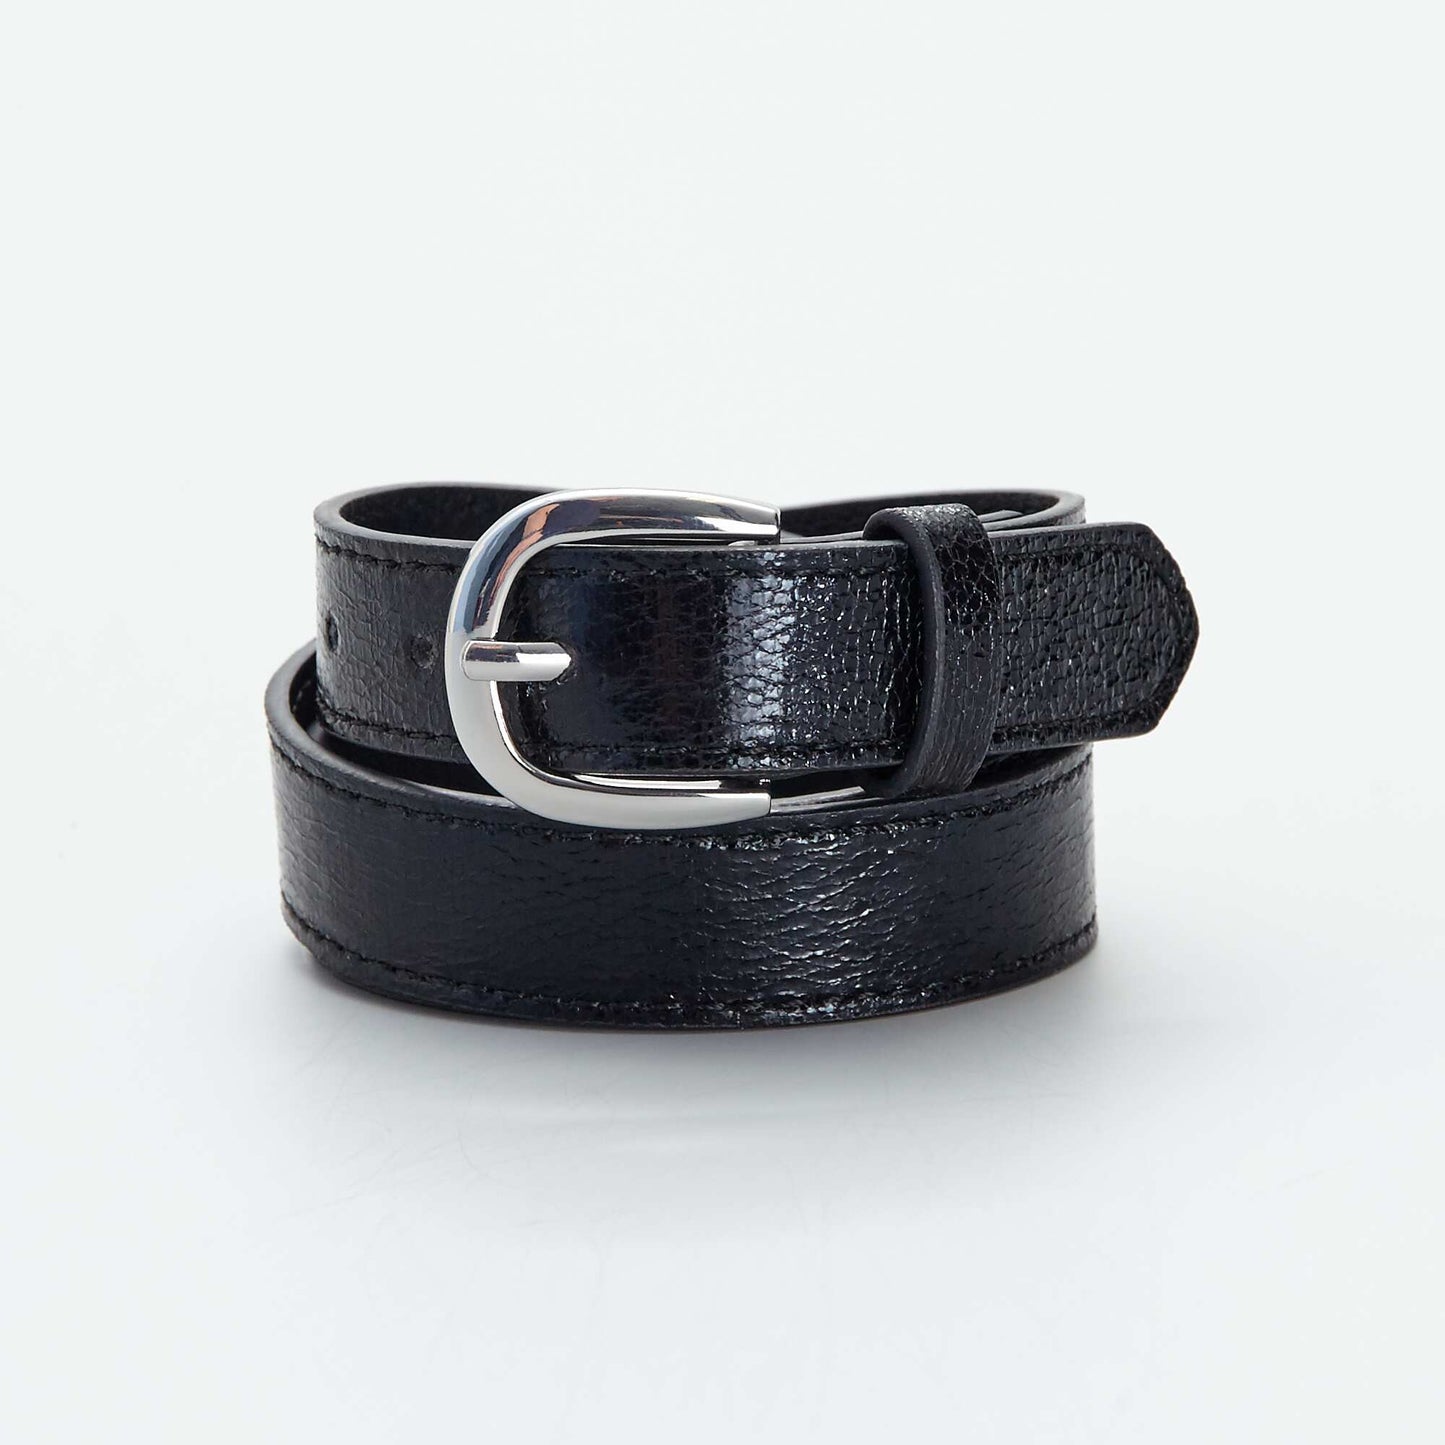 Iridescent textured belt black